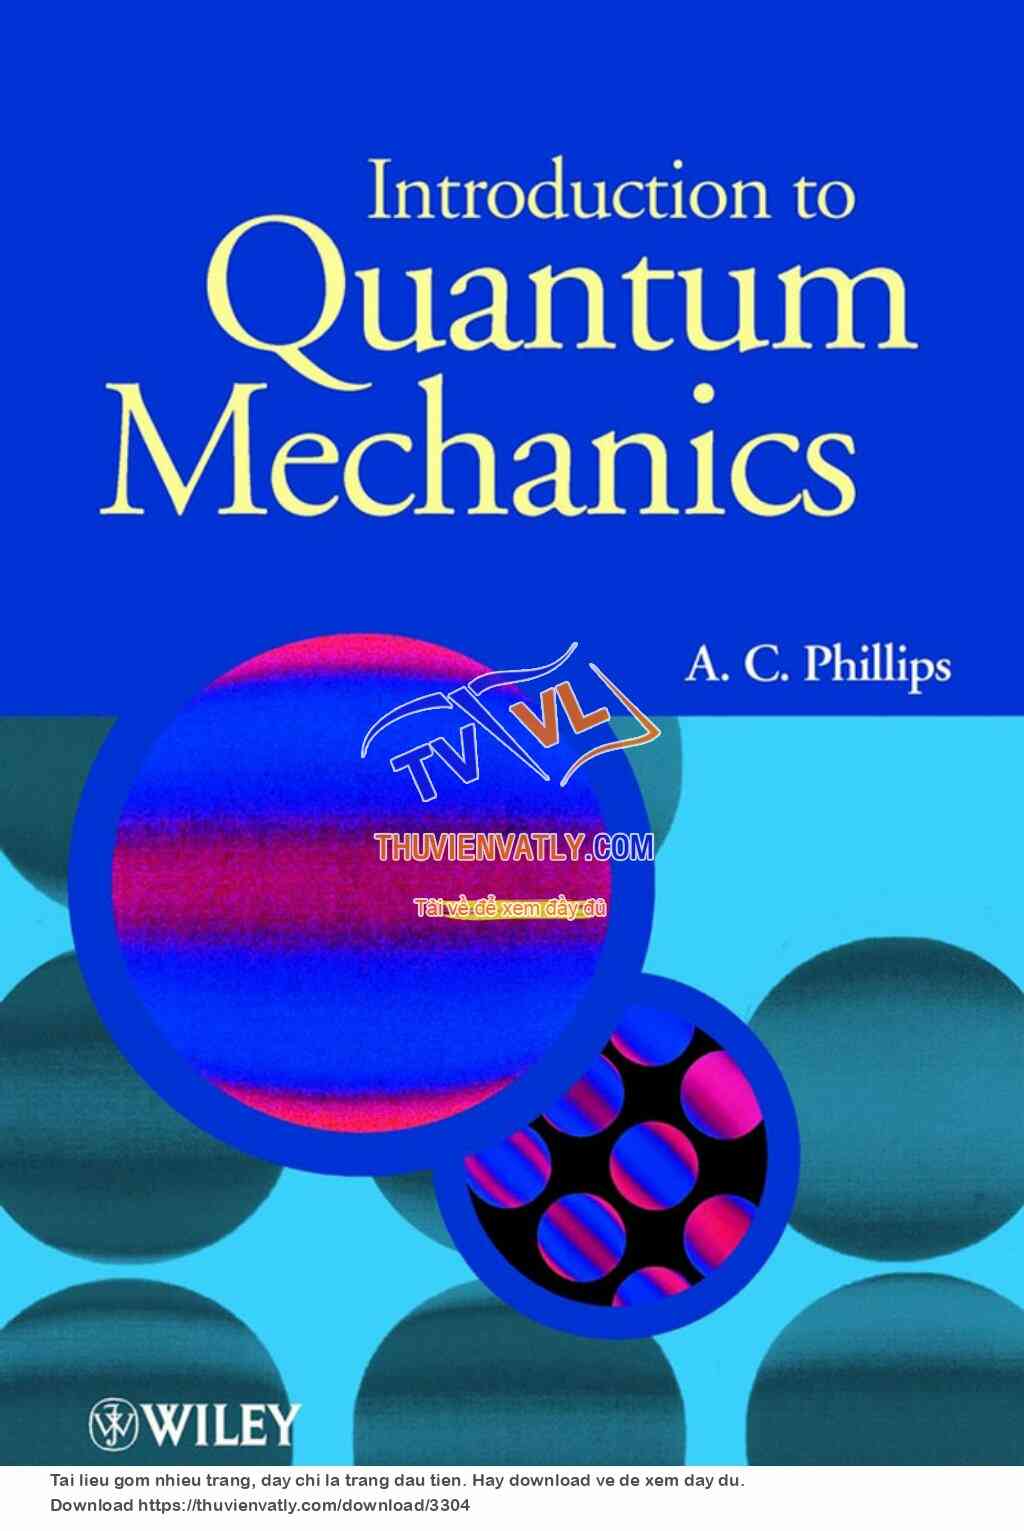 Introduction to Quantum Mechanics - A.C. Phillips